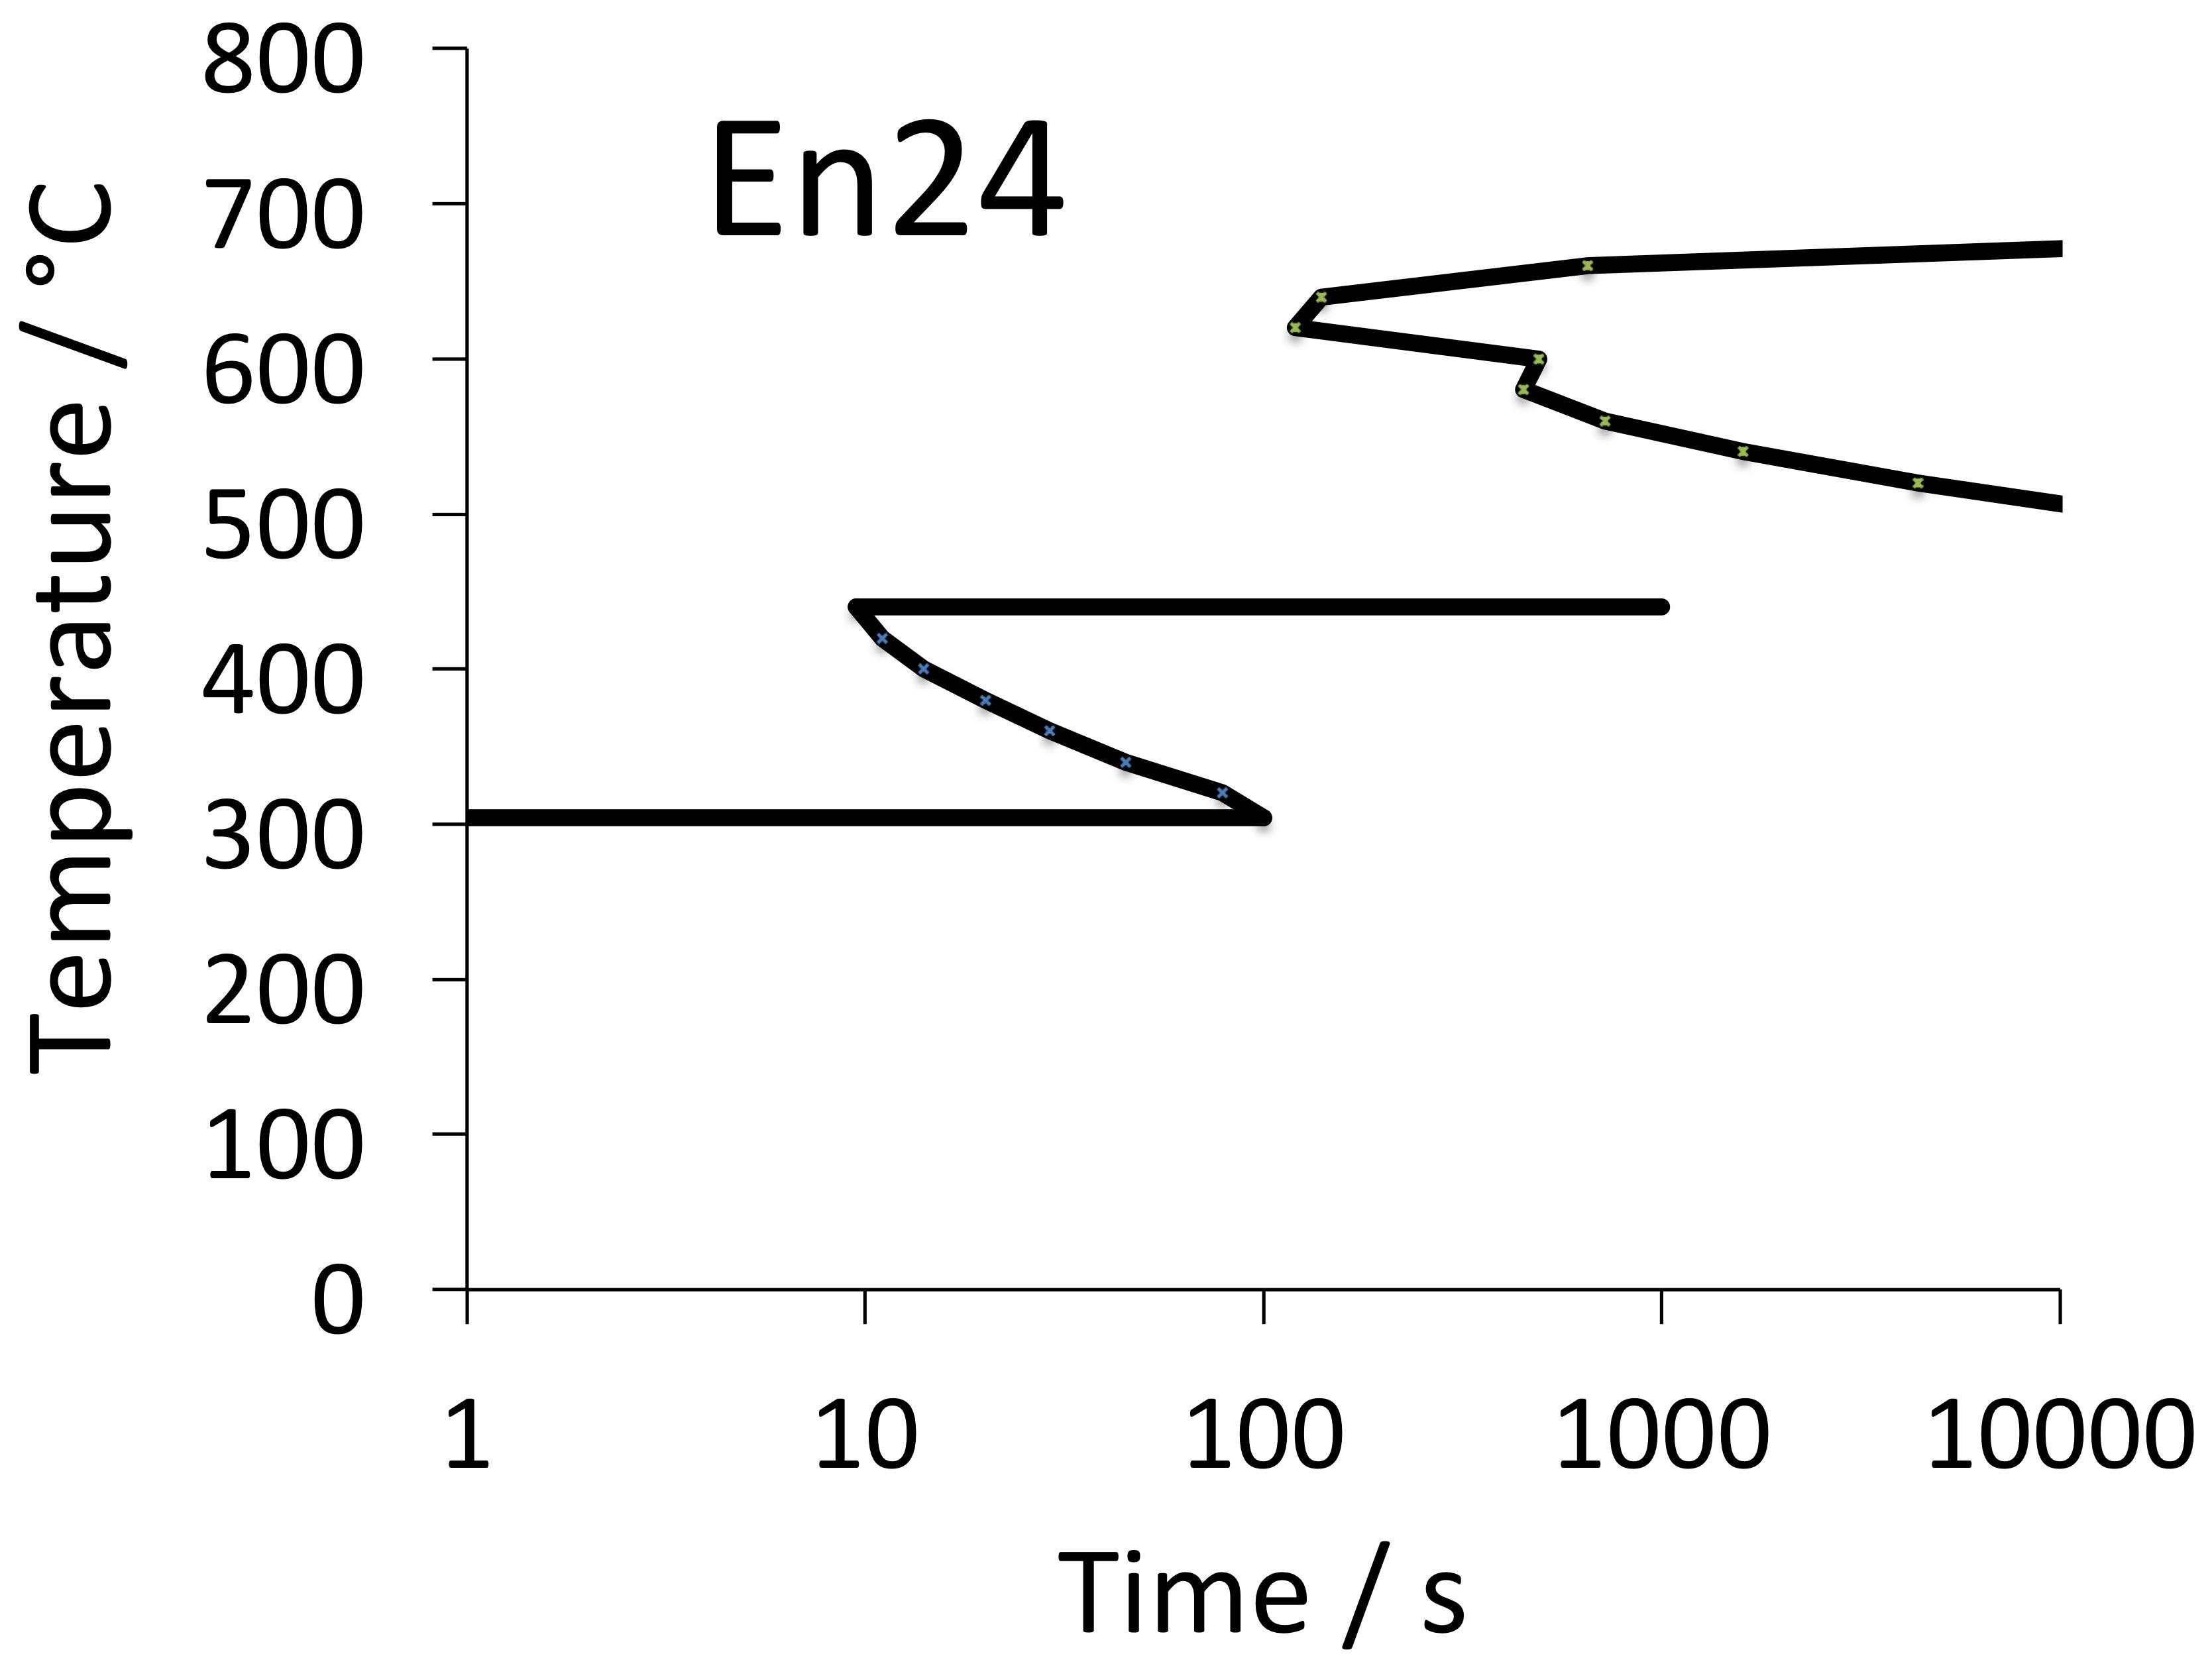 En24 TTT curve calculated